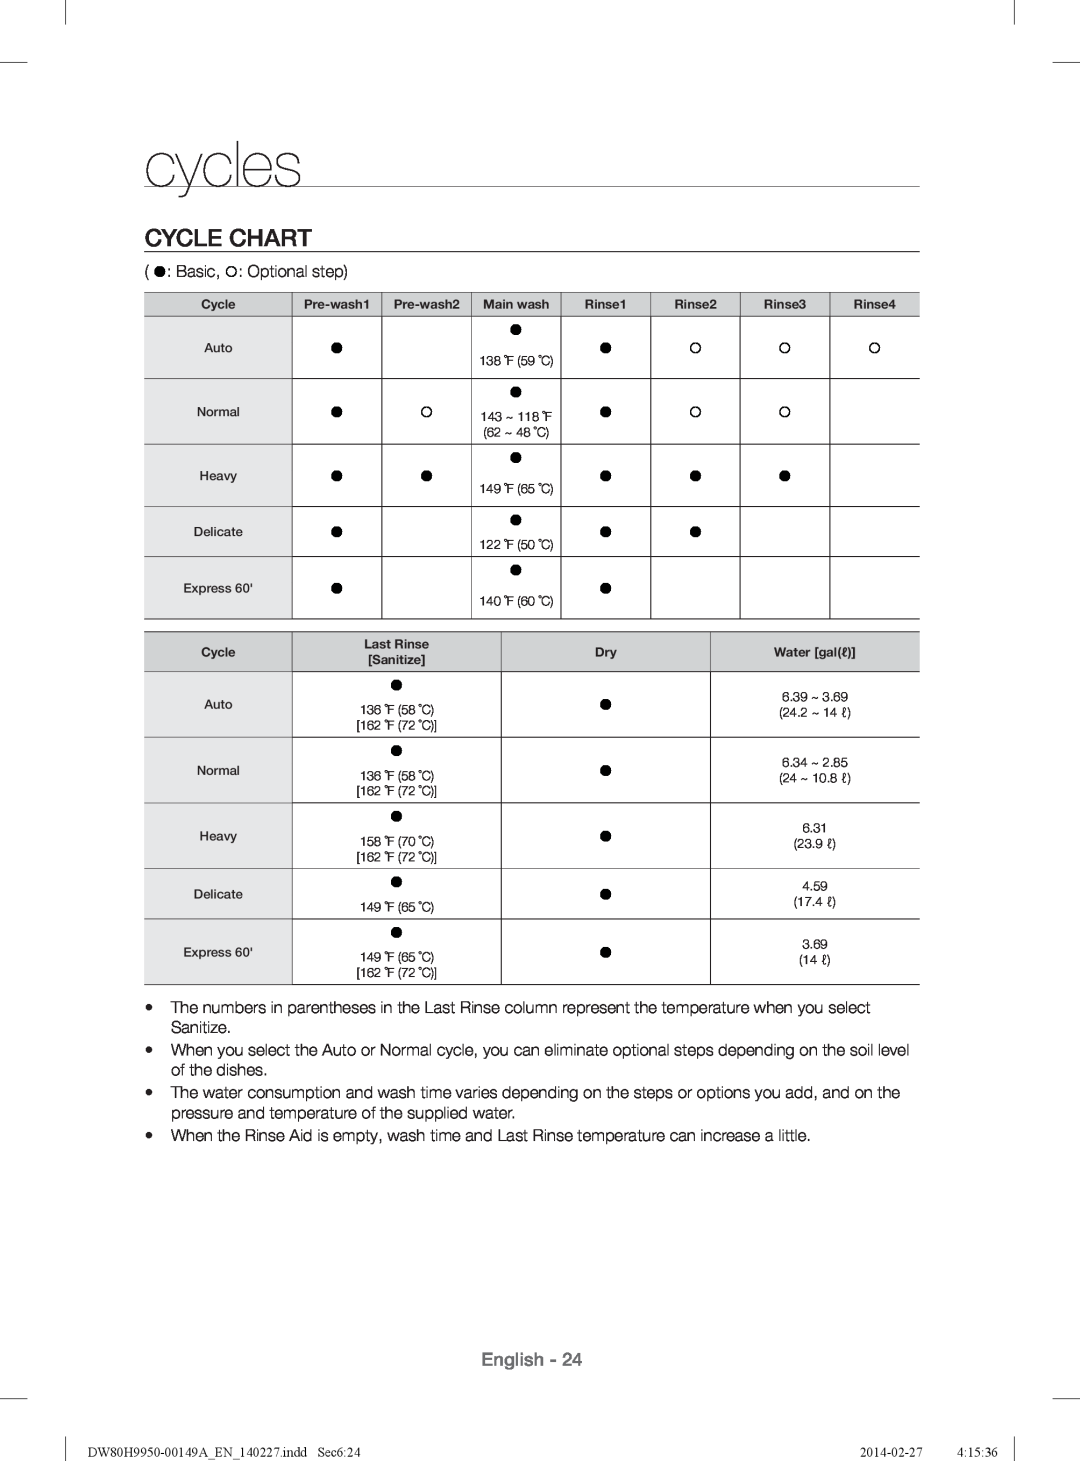 Samsung DW80H9930US user manual cycles, Cycle Chart, English 